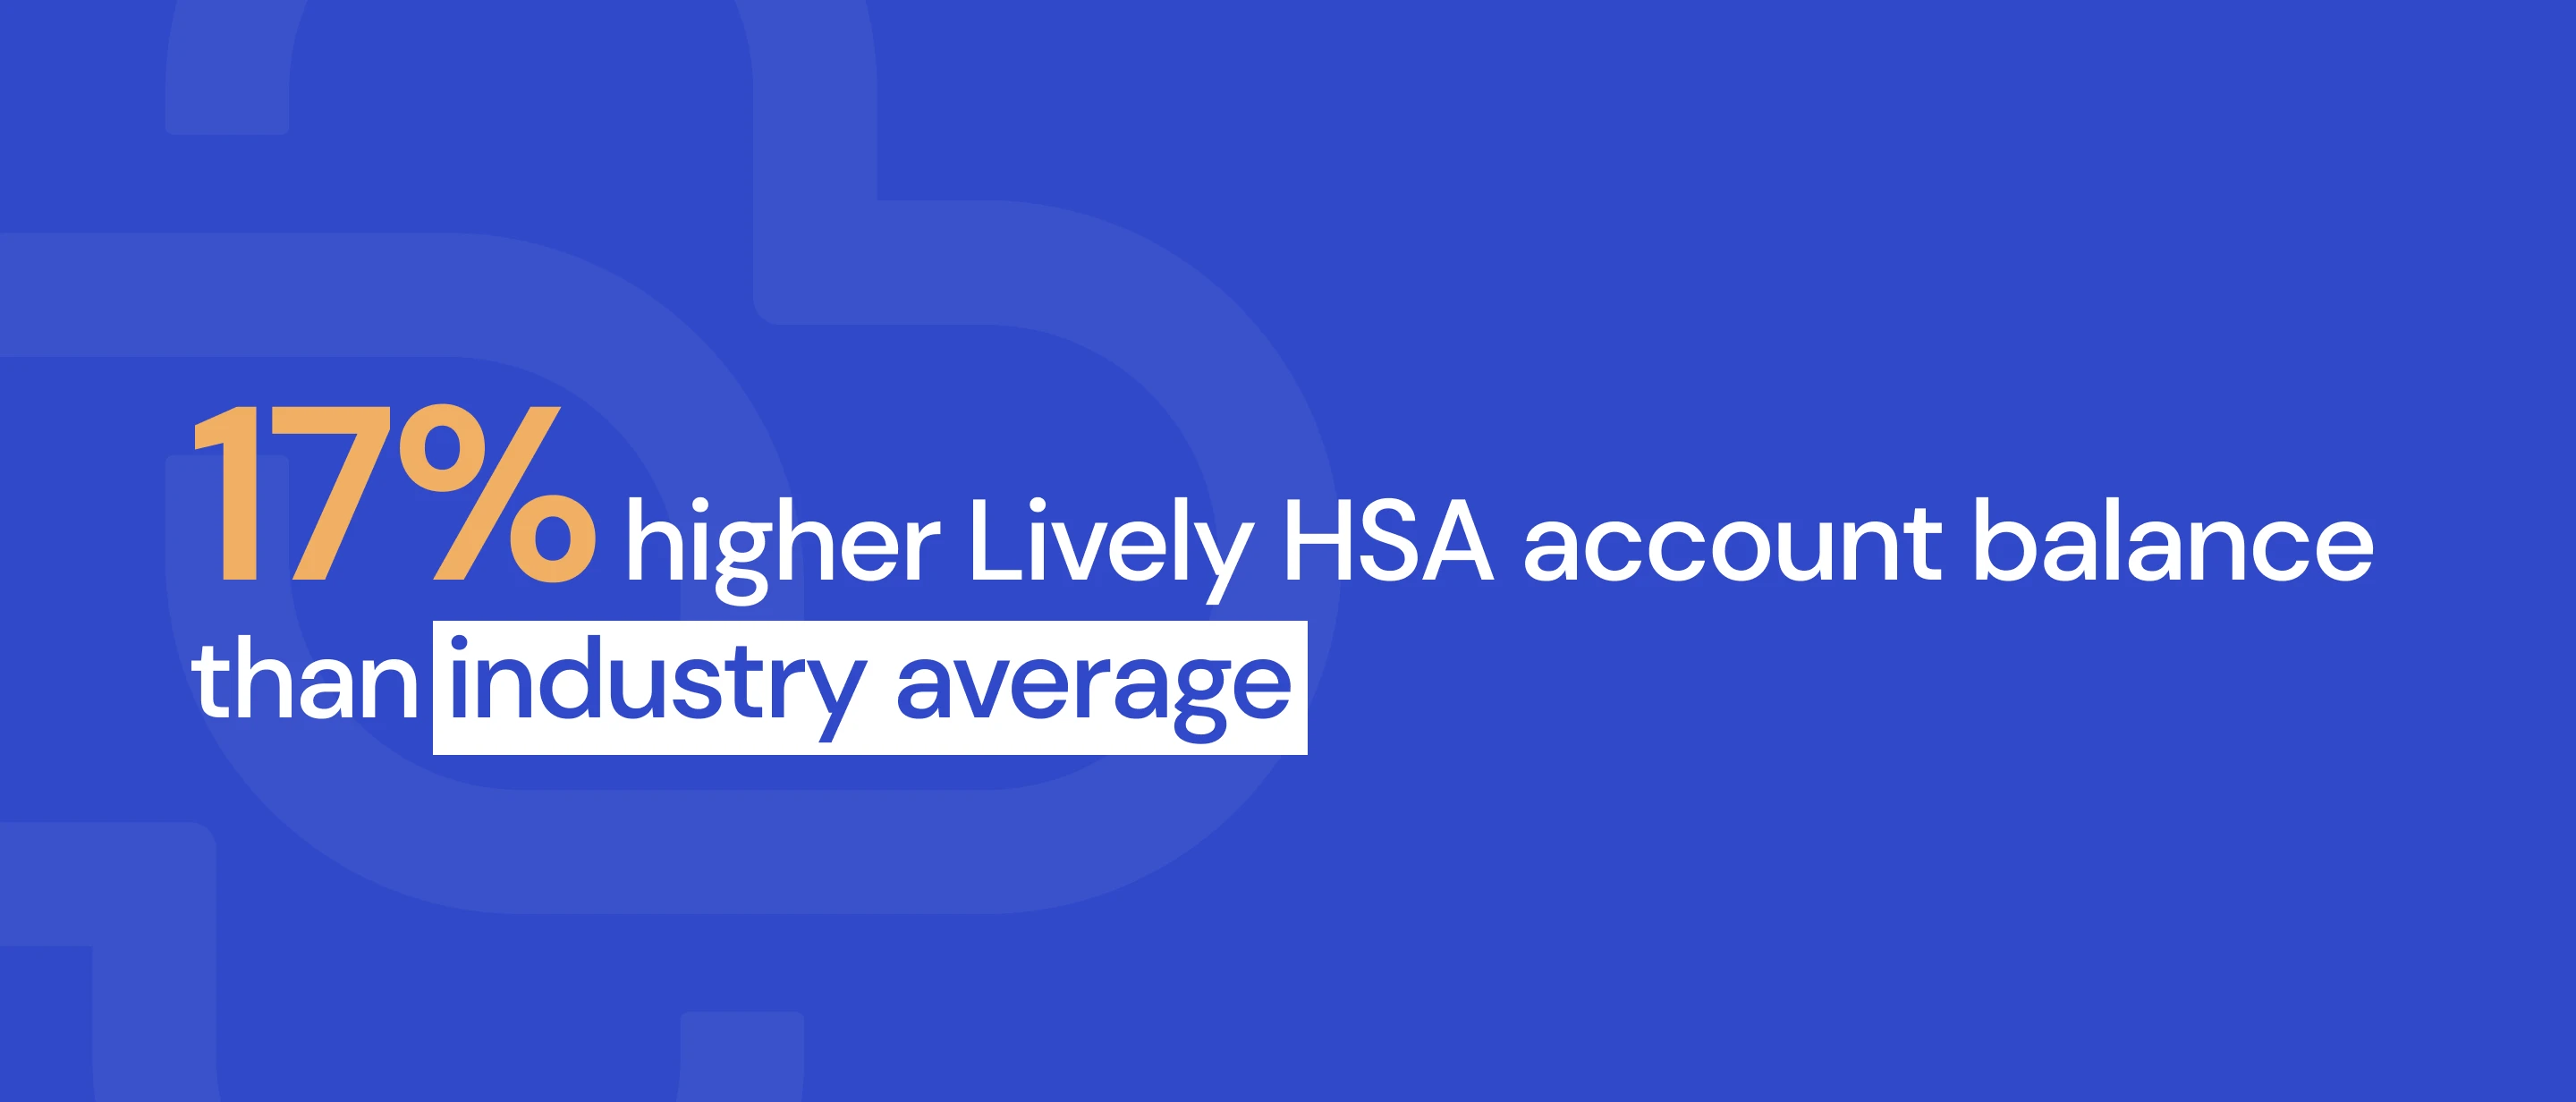 Blog HSA Snapsnot Report Images - Higher Account Balance